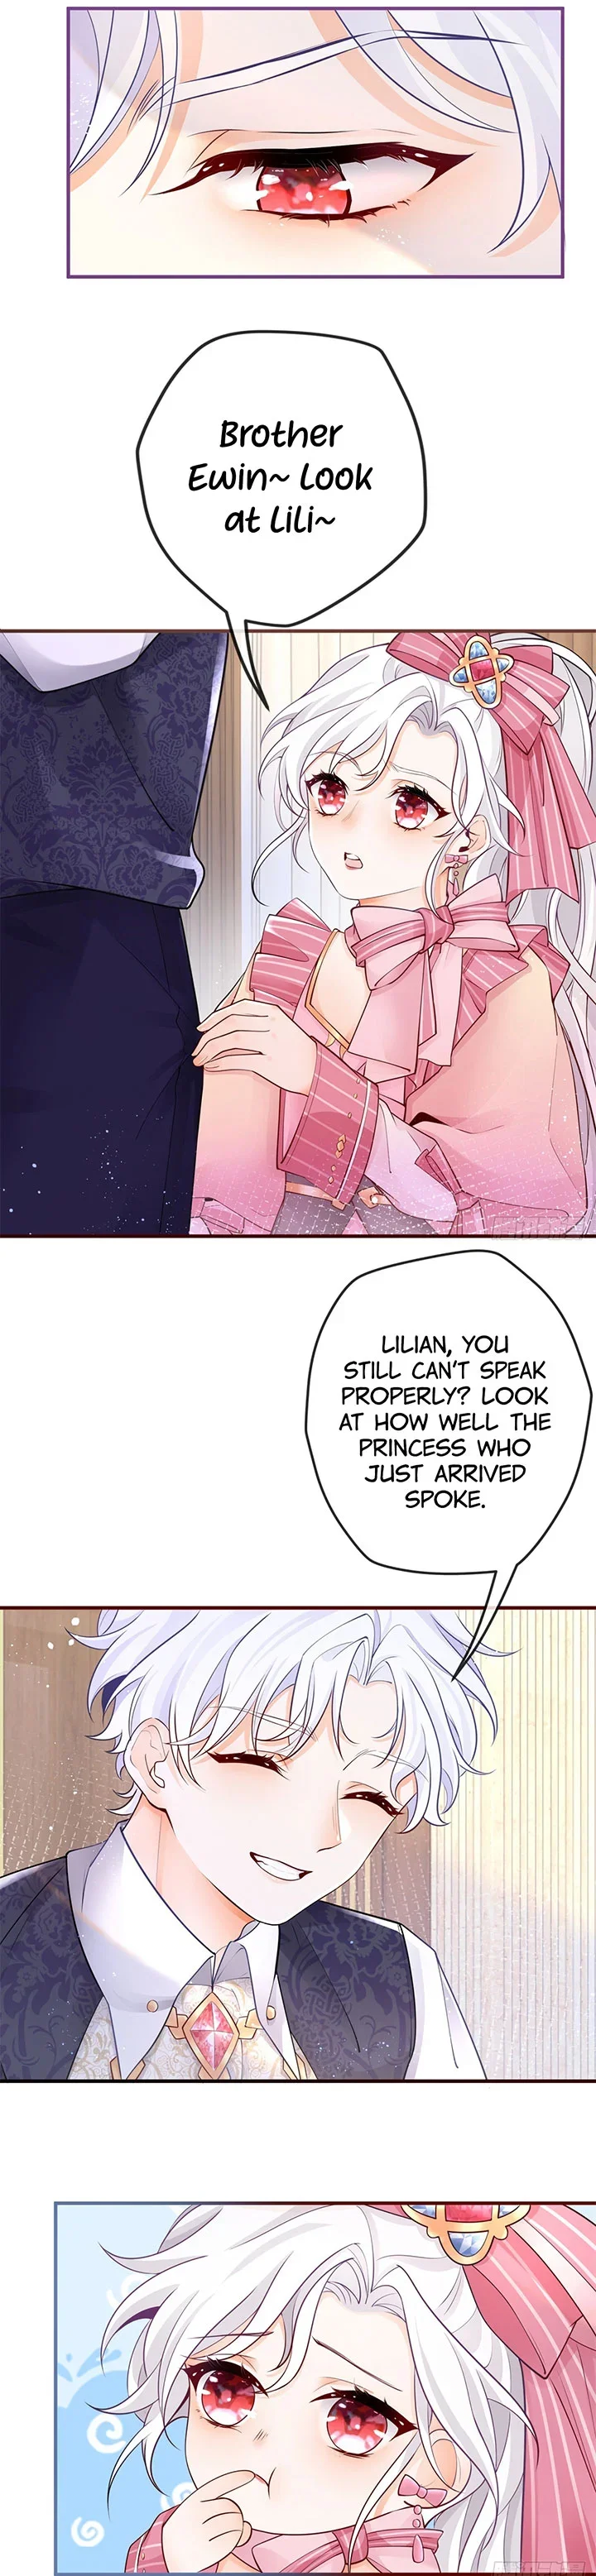 I Became the Sacrificial Princess Chapter 3 - Page 8